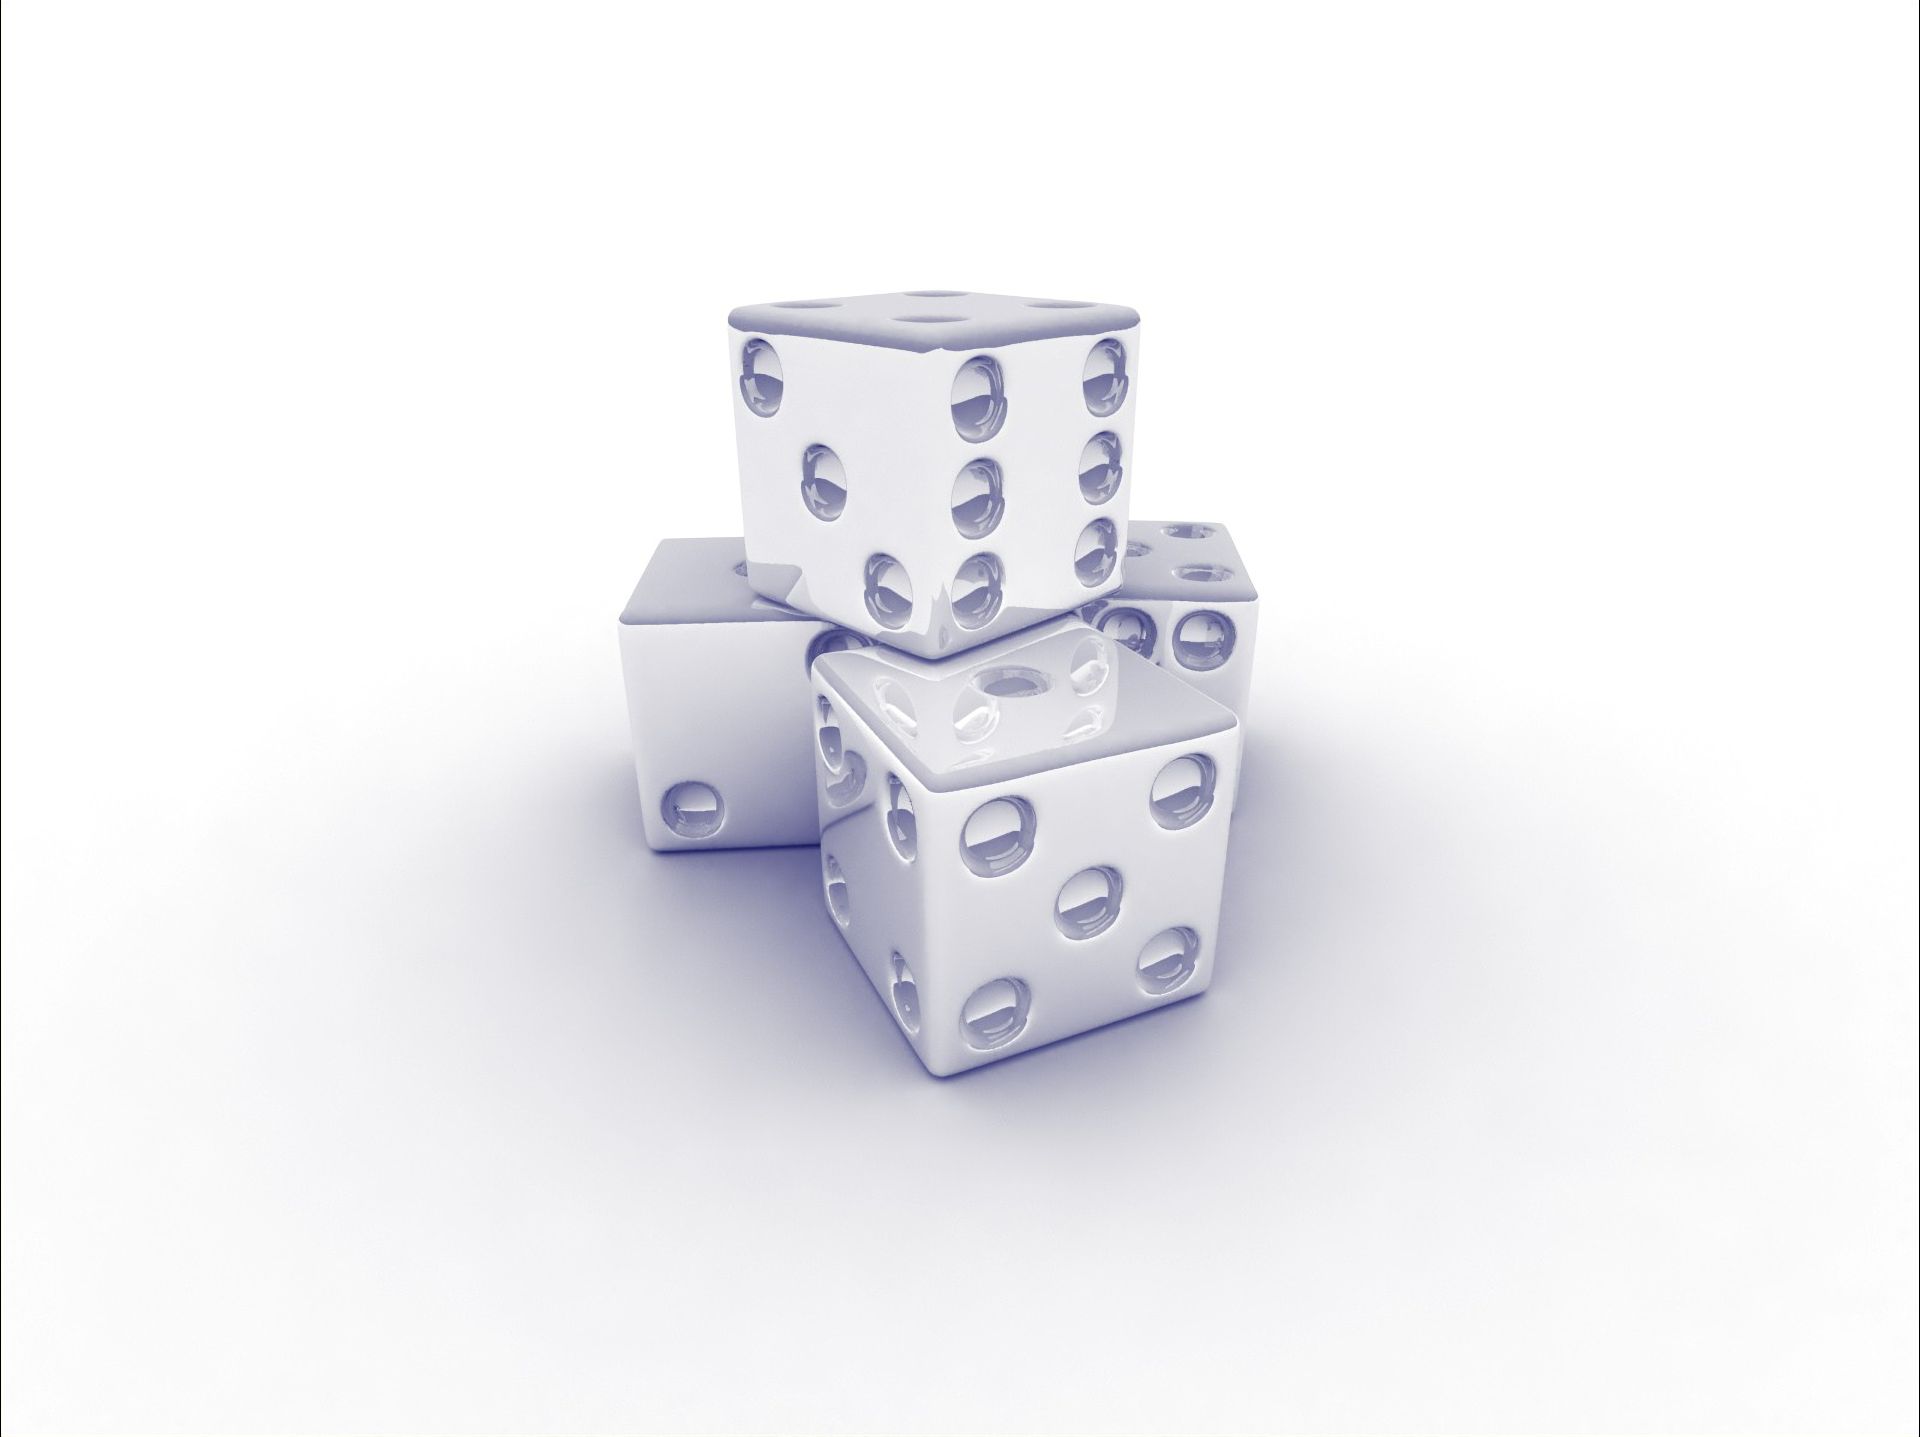 game, dice Image for desktop